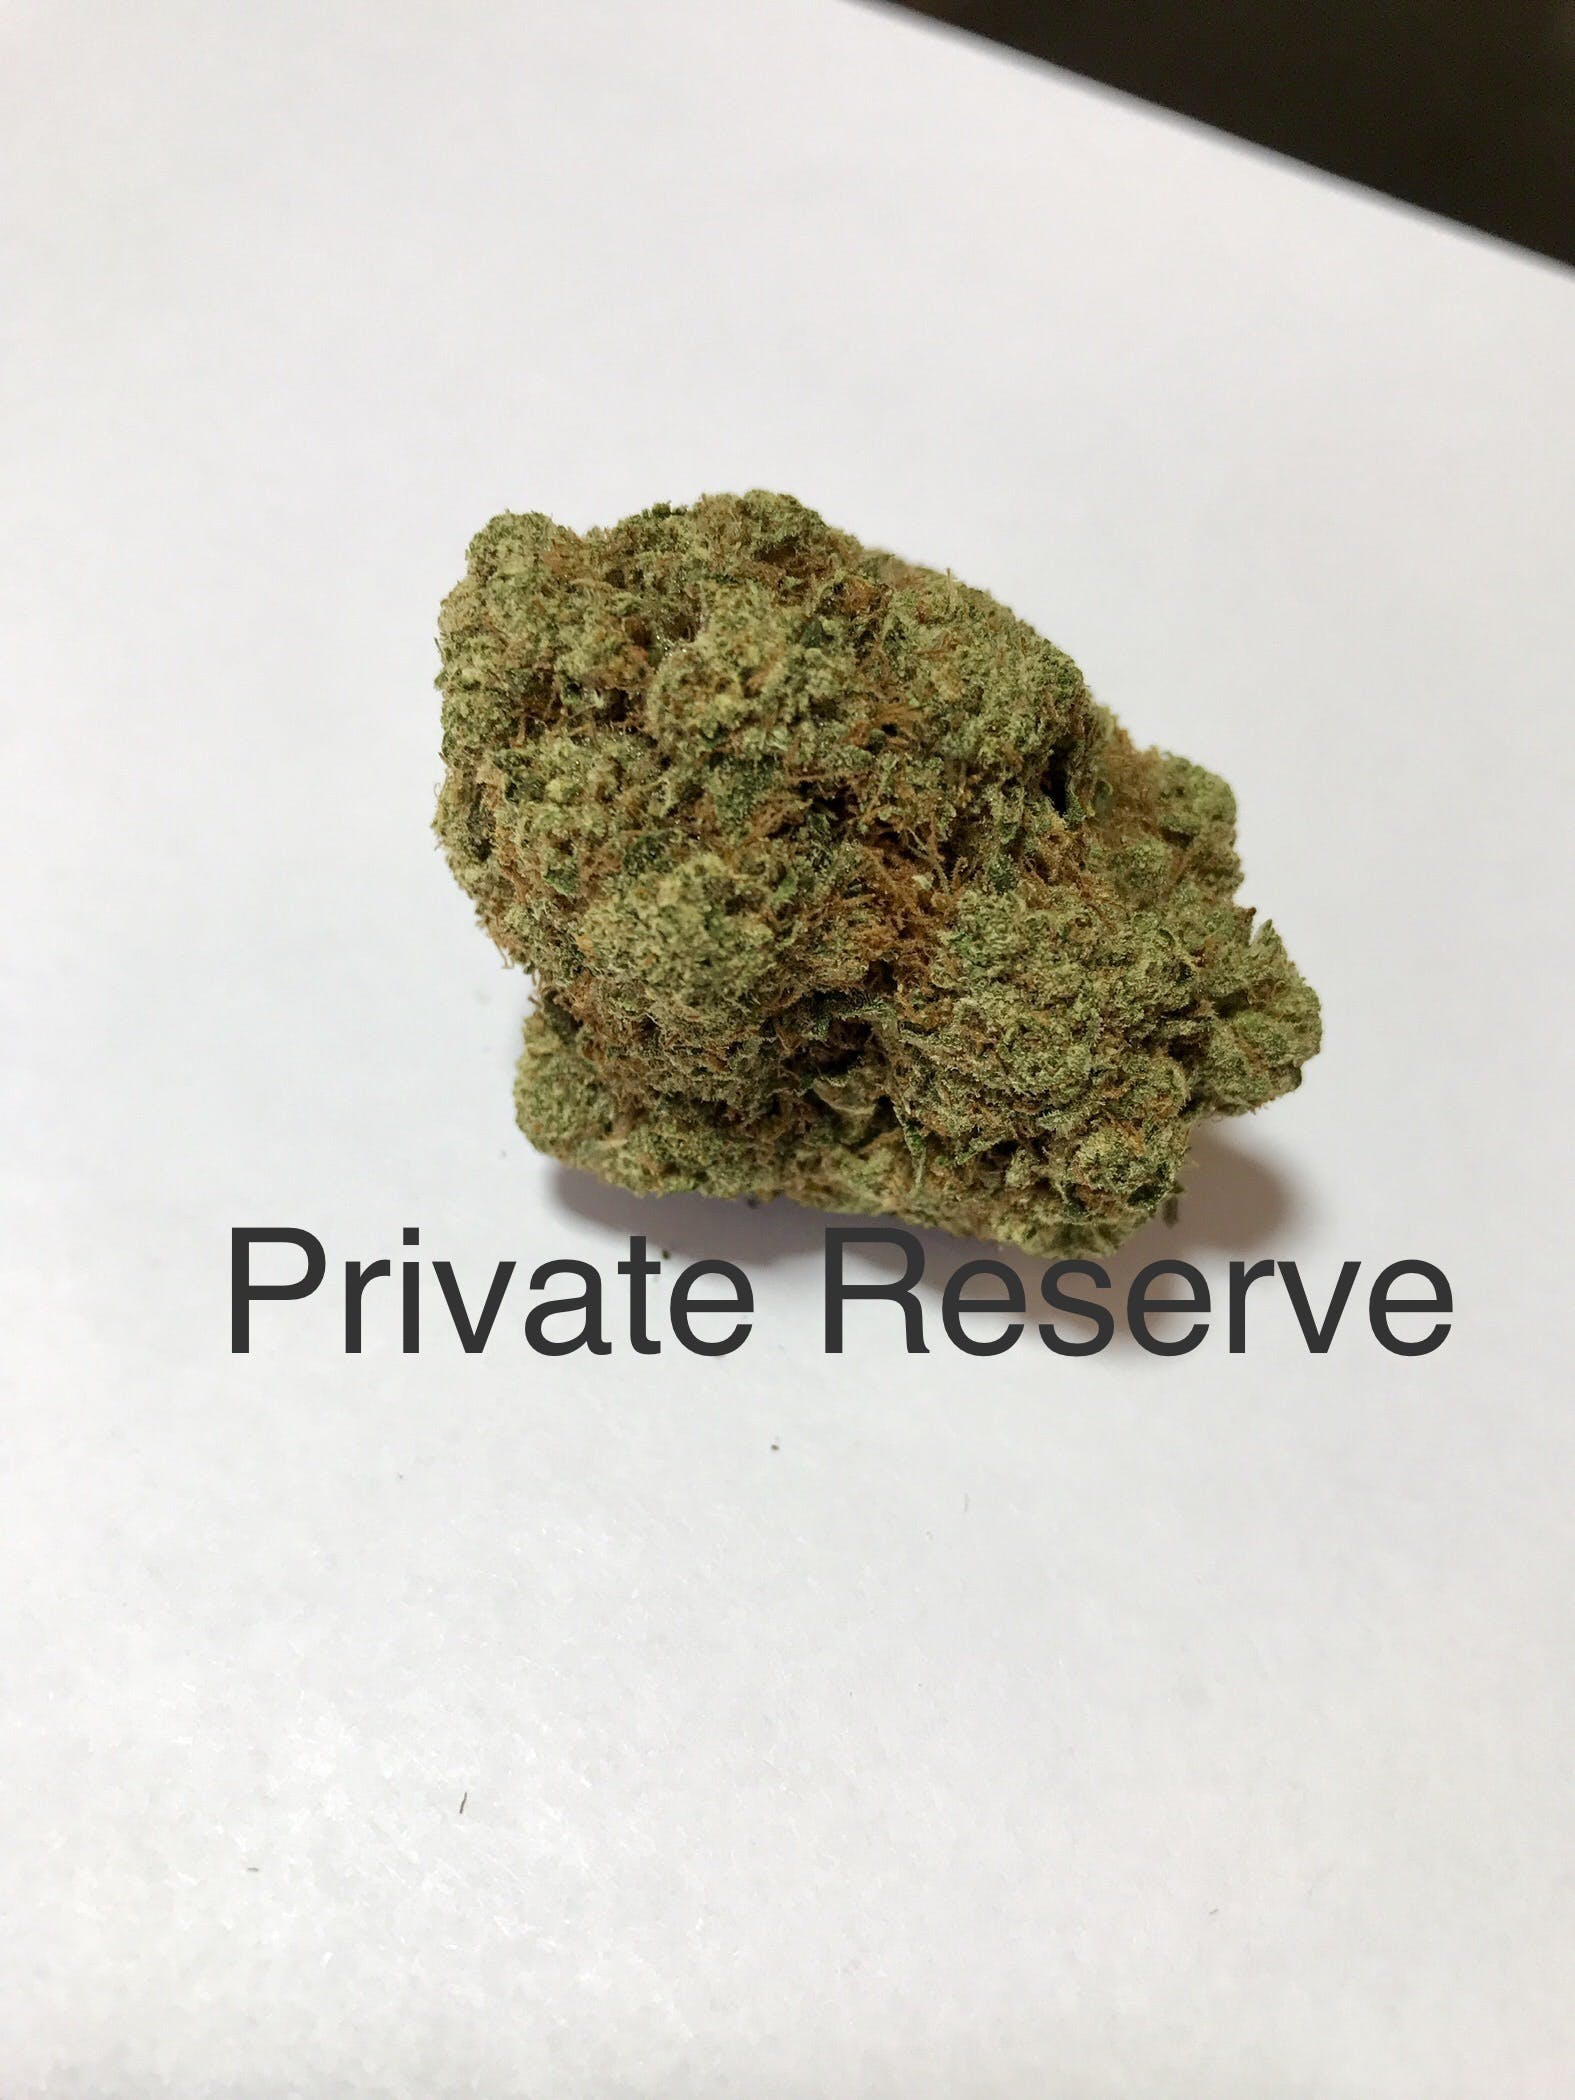 marijuana-dispensaries-924-nw-150th-street-edmond-owasso-organics-private-reserve-bulk-thc-flower